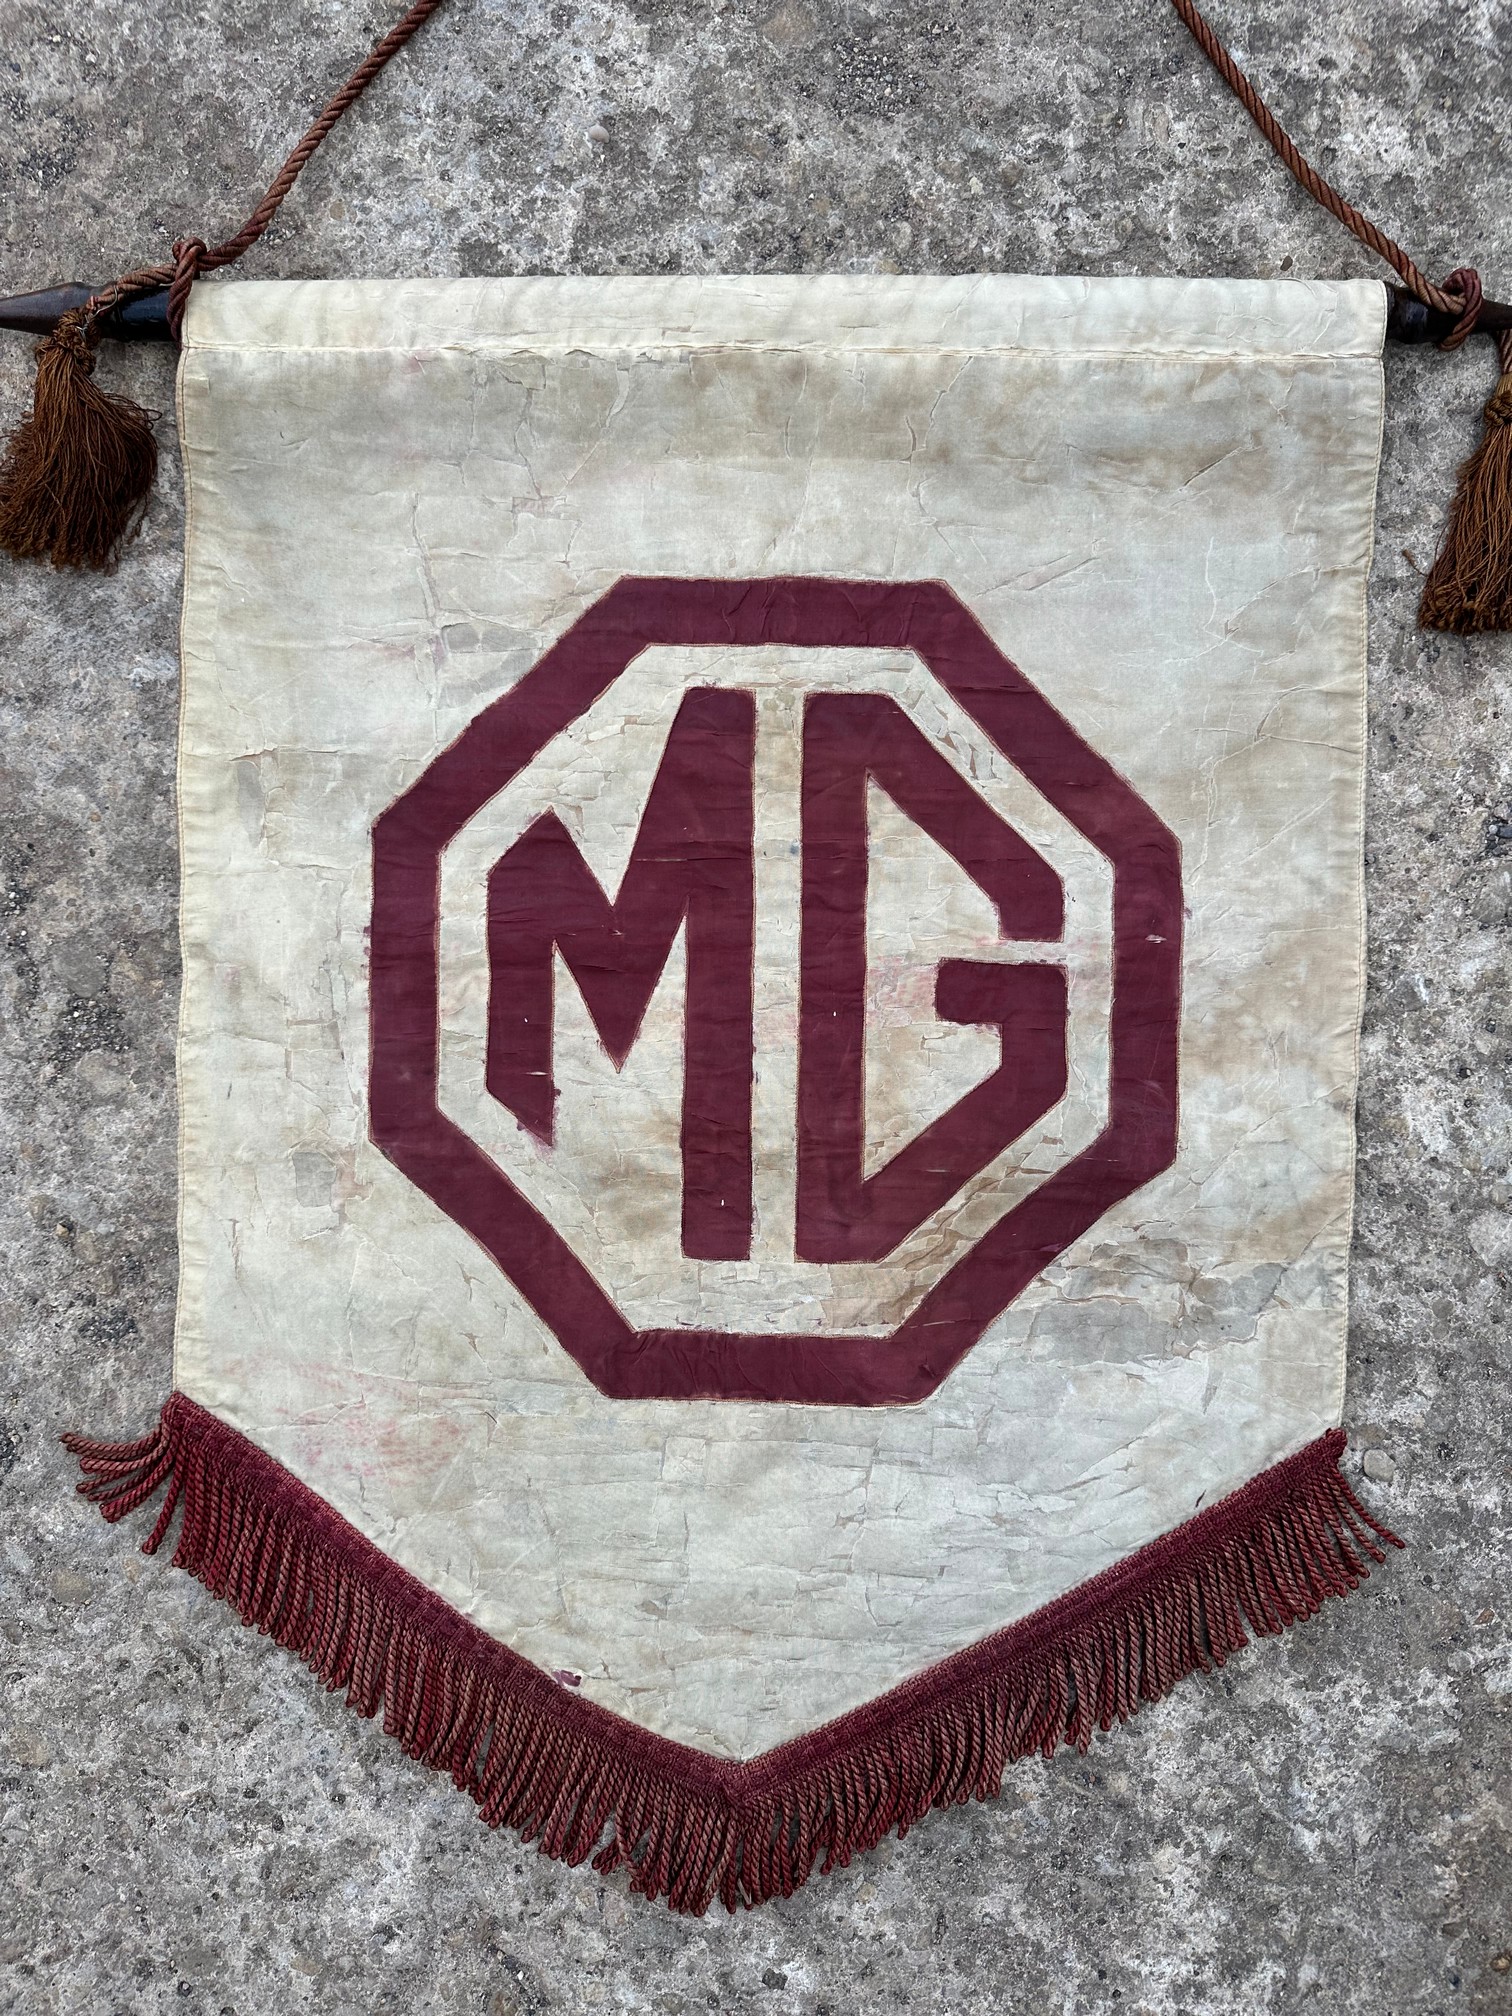 An original MG showroom banner, circa 1940s/1950s.